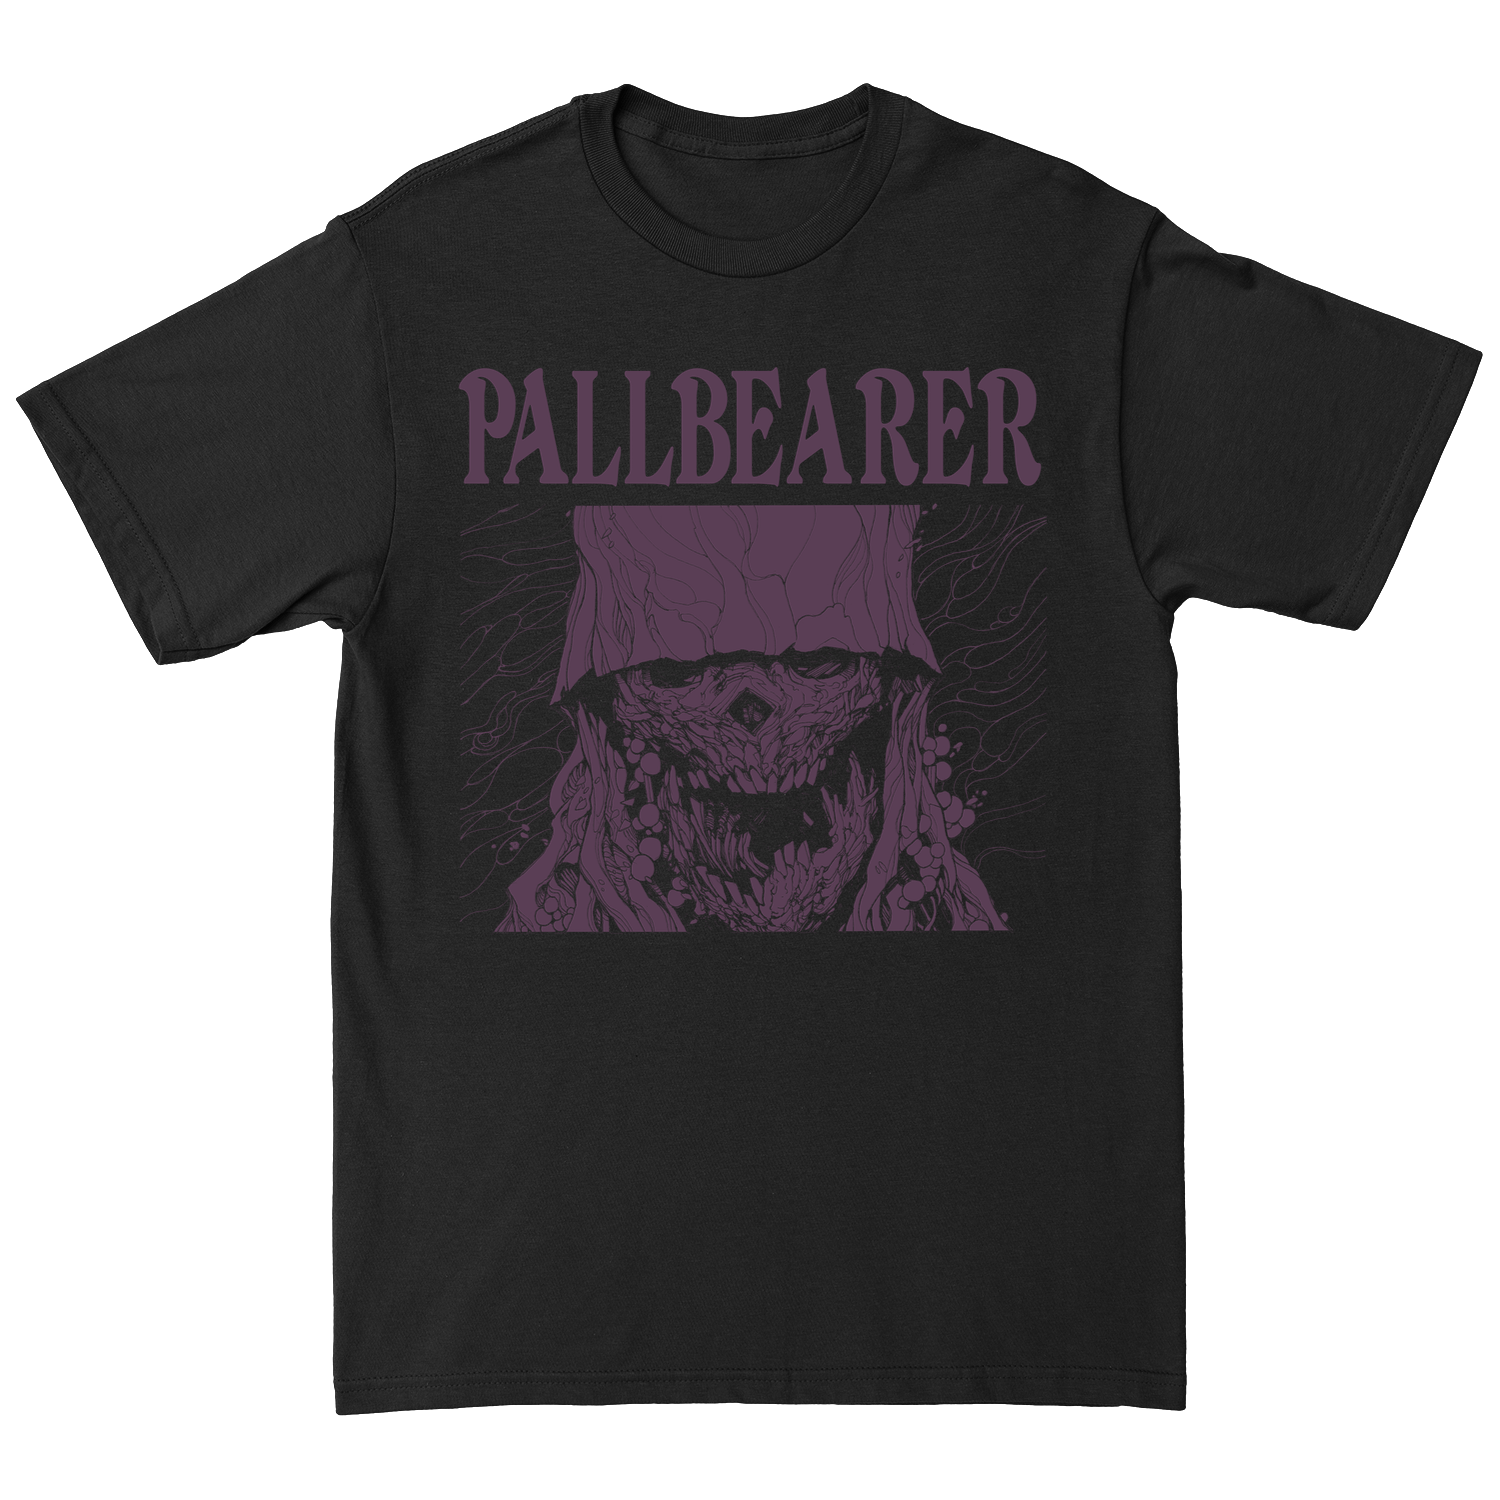 PALLBEARER "The Guide" Black T-Shirt